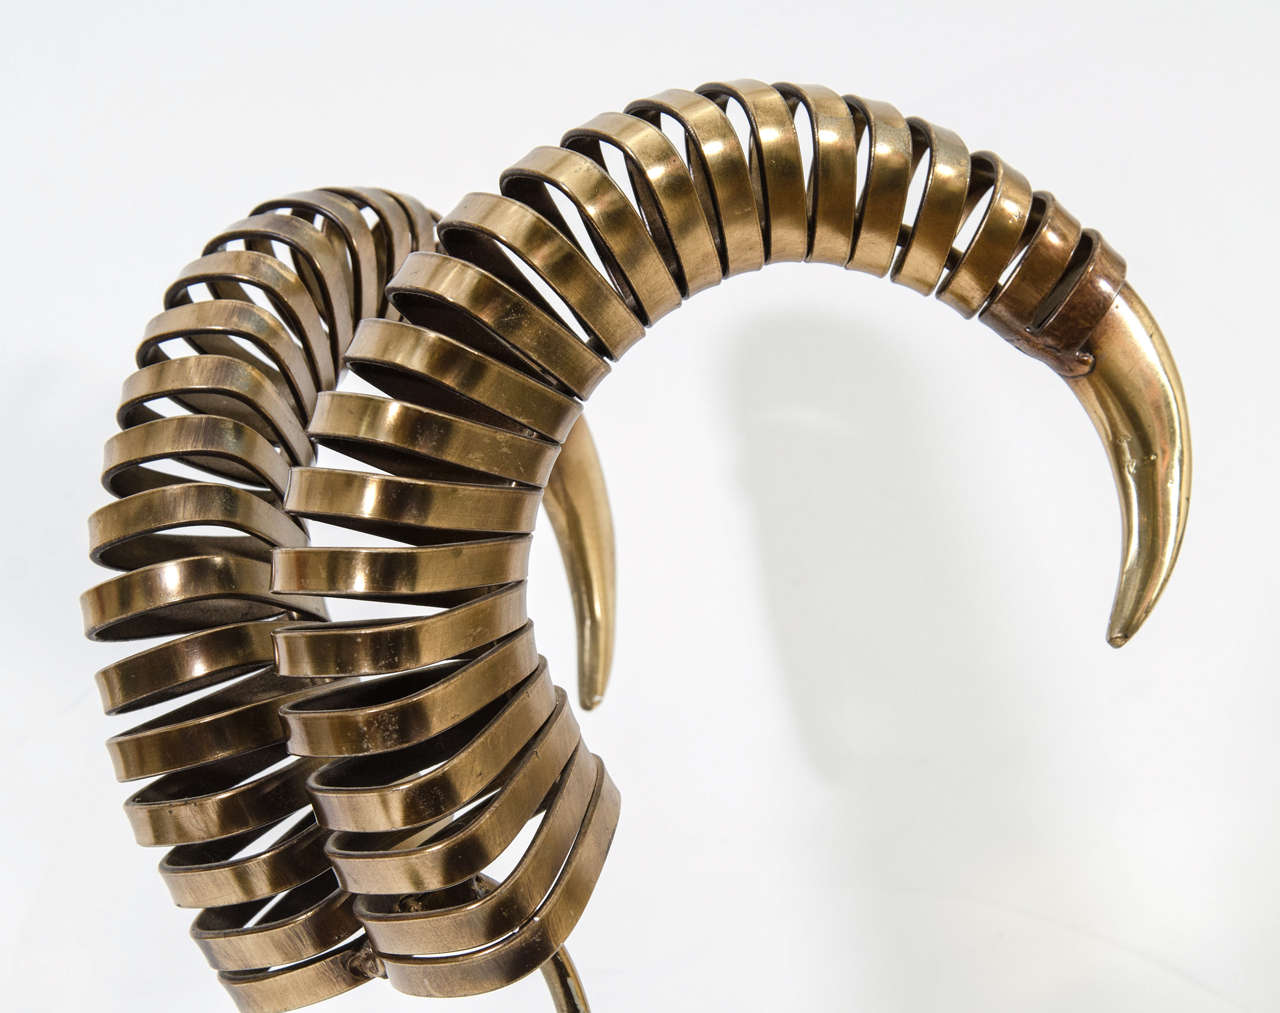 Vintage Brass Ram's Horn Sculpture by Curtis Jere 1